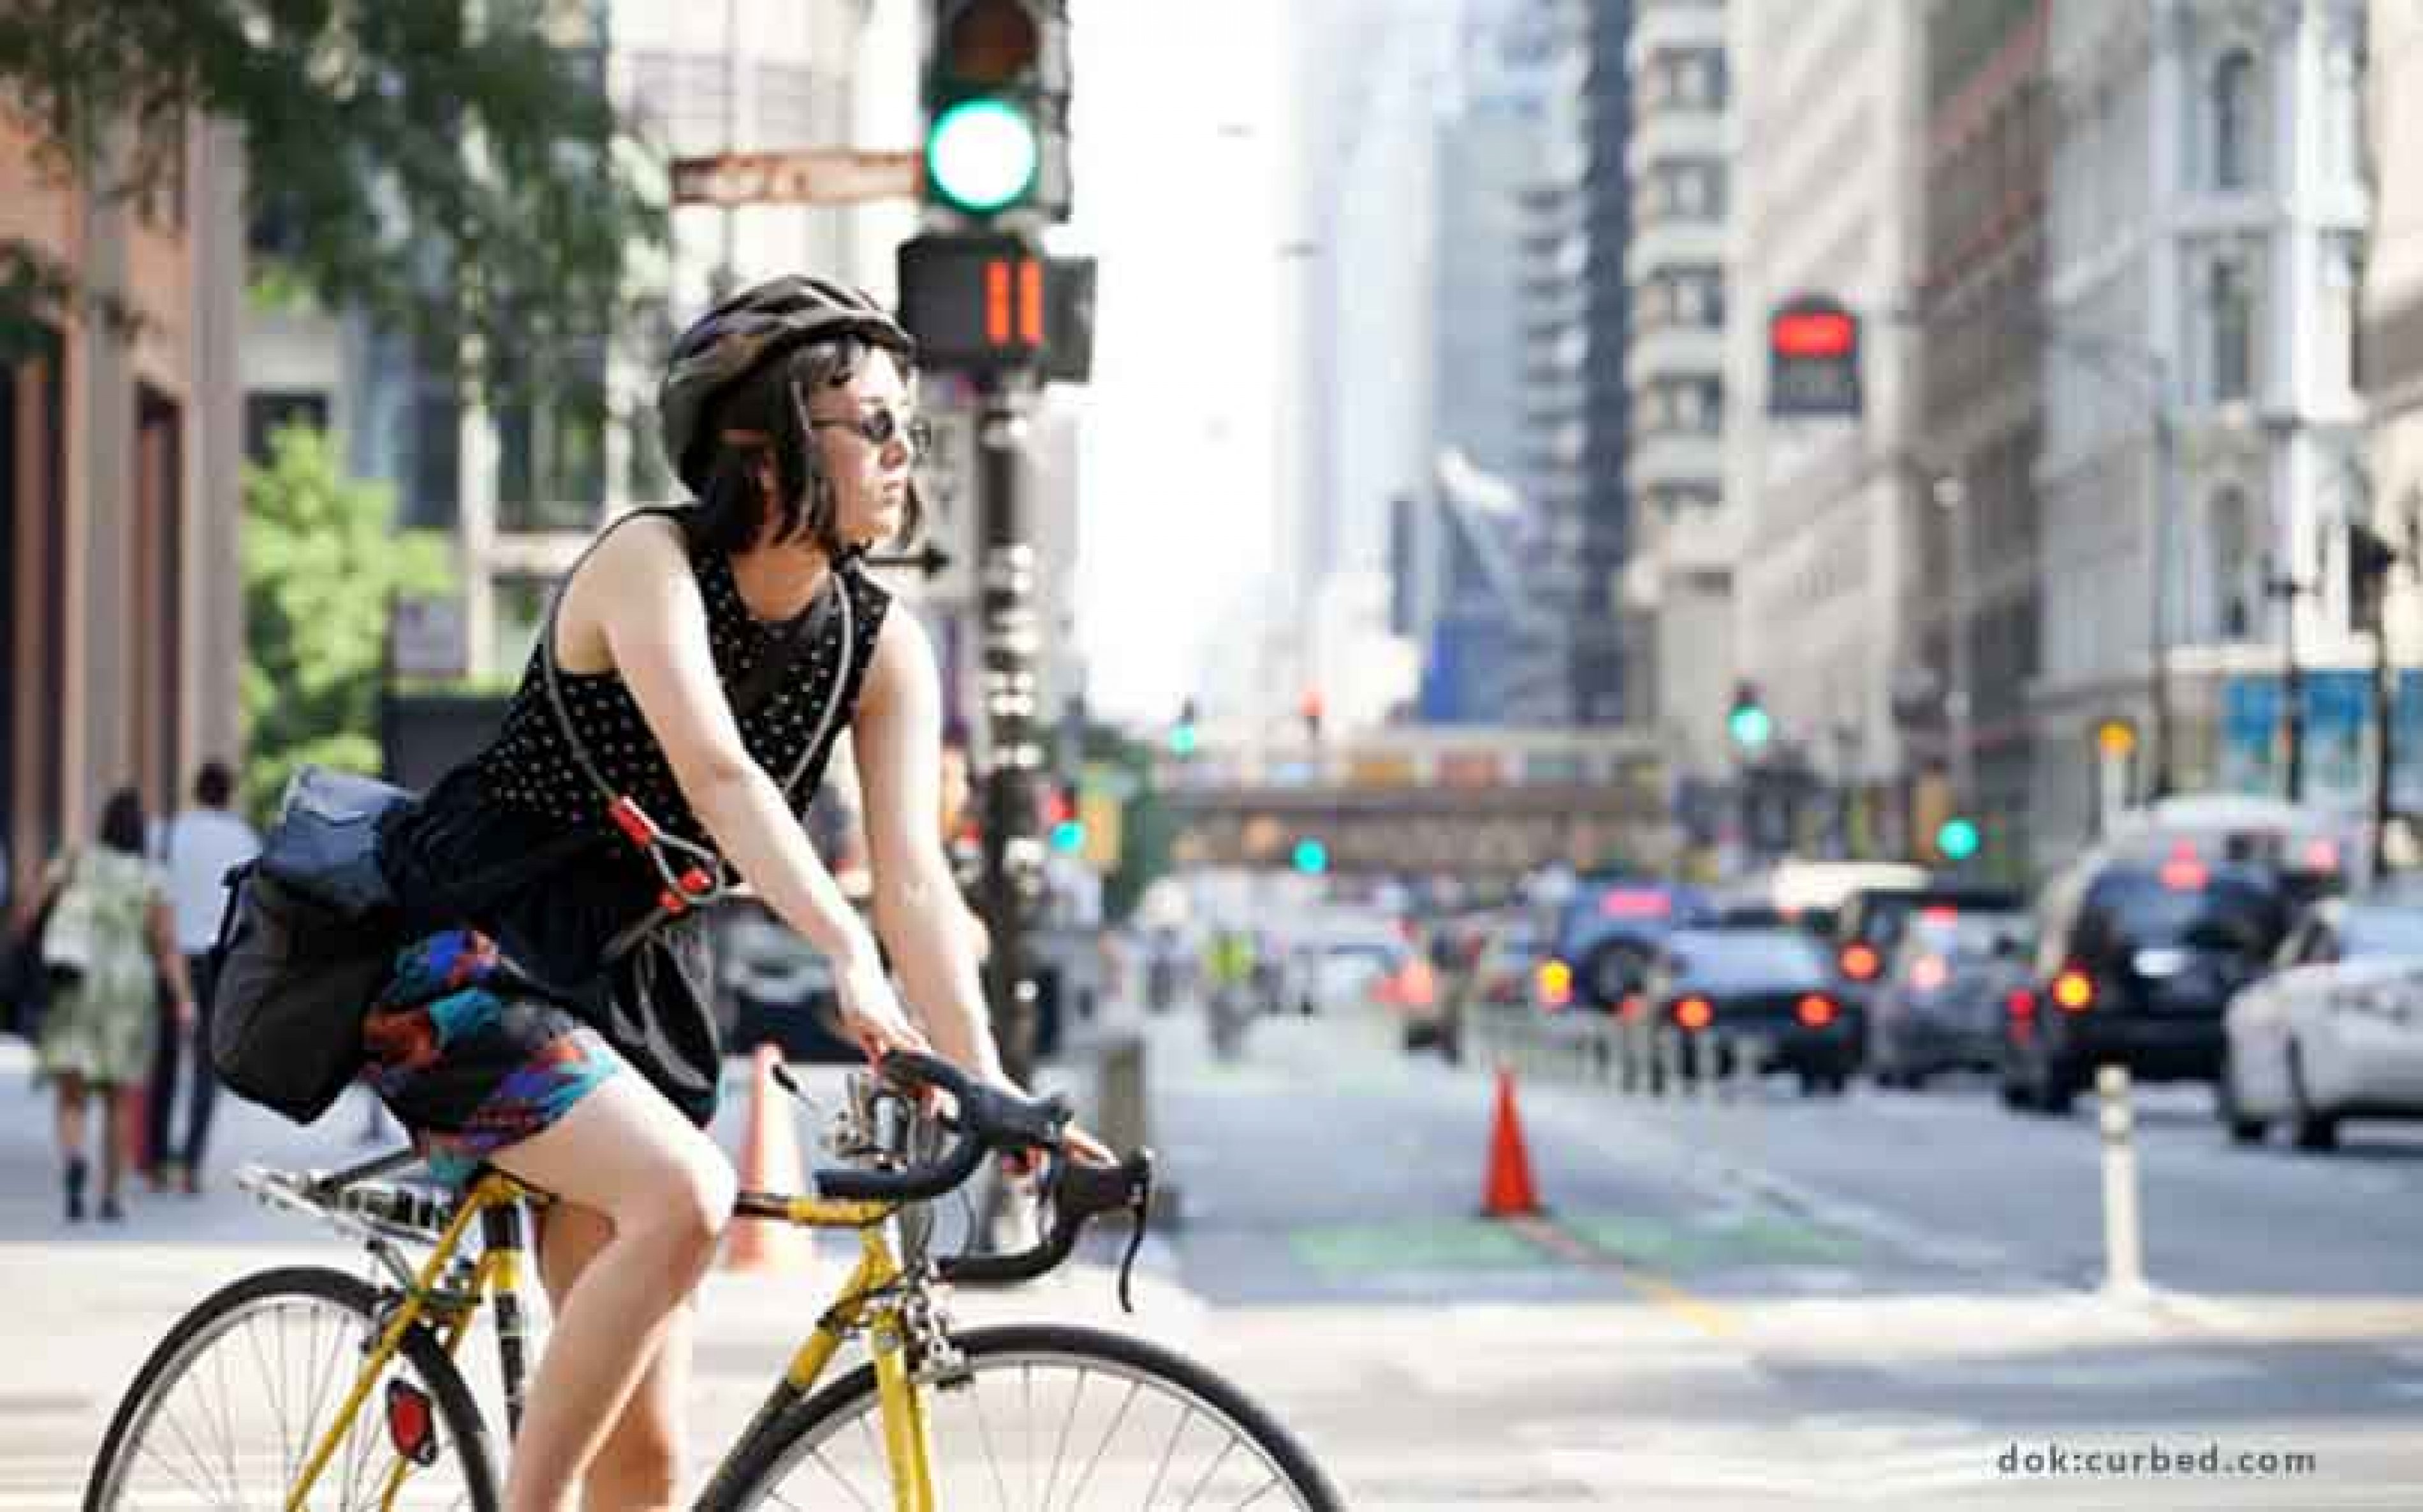 Девушка велосипедиста. Девушка на велосипеде в городе. Велосипедист в городе. Велосипед в городе. Велосипедисты в городе фон.